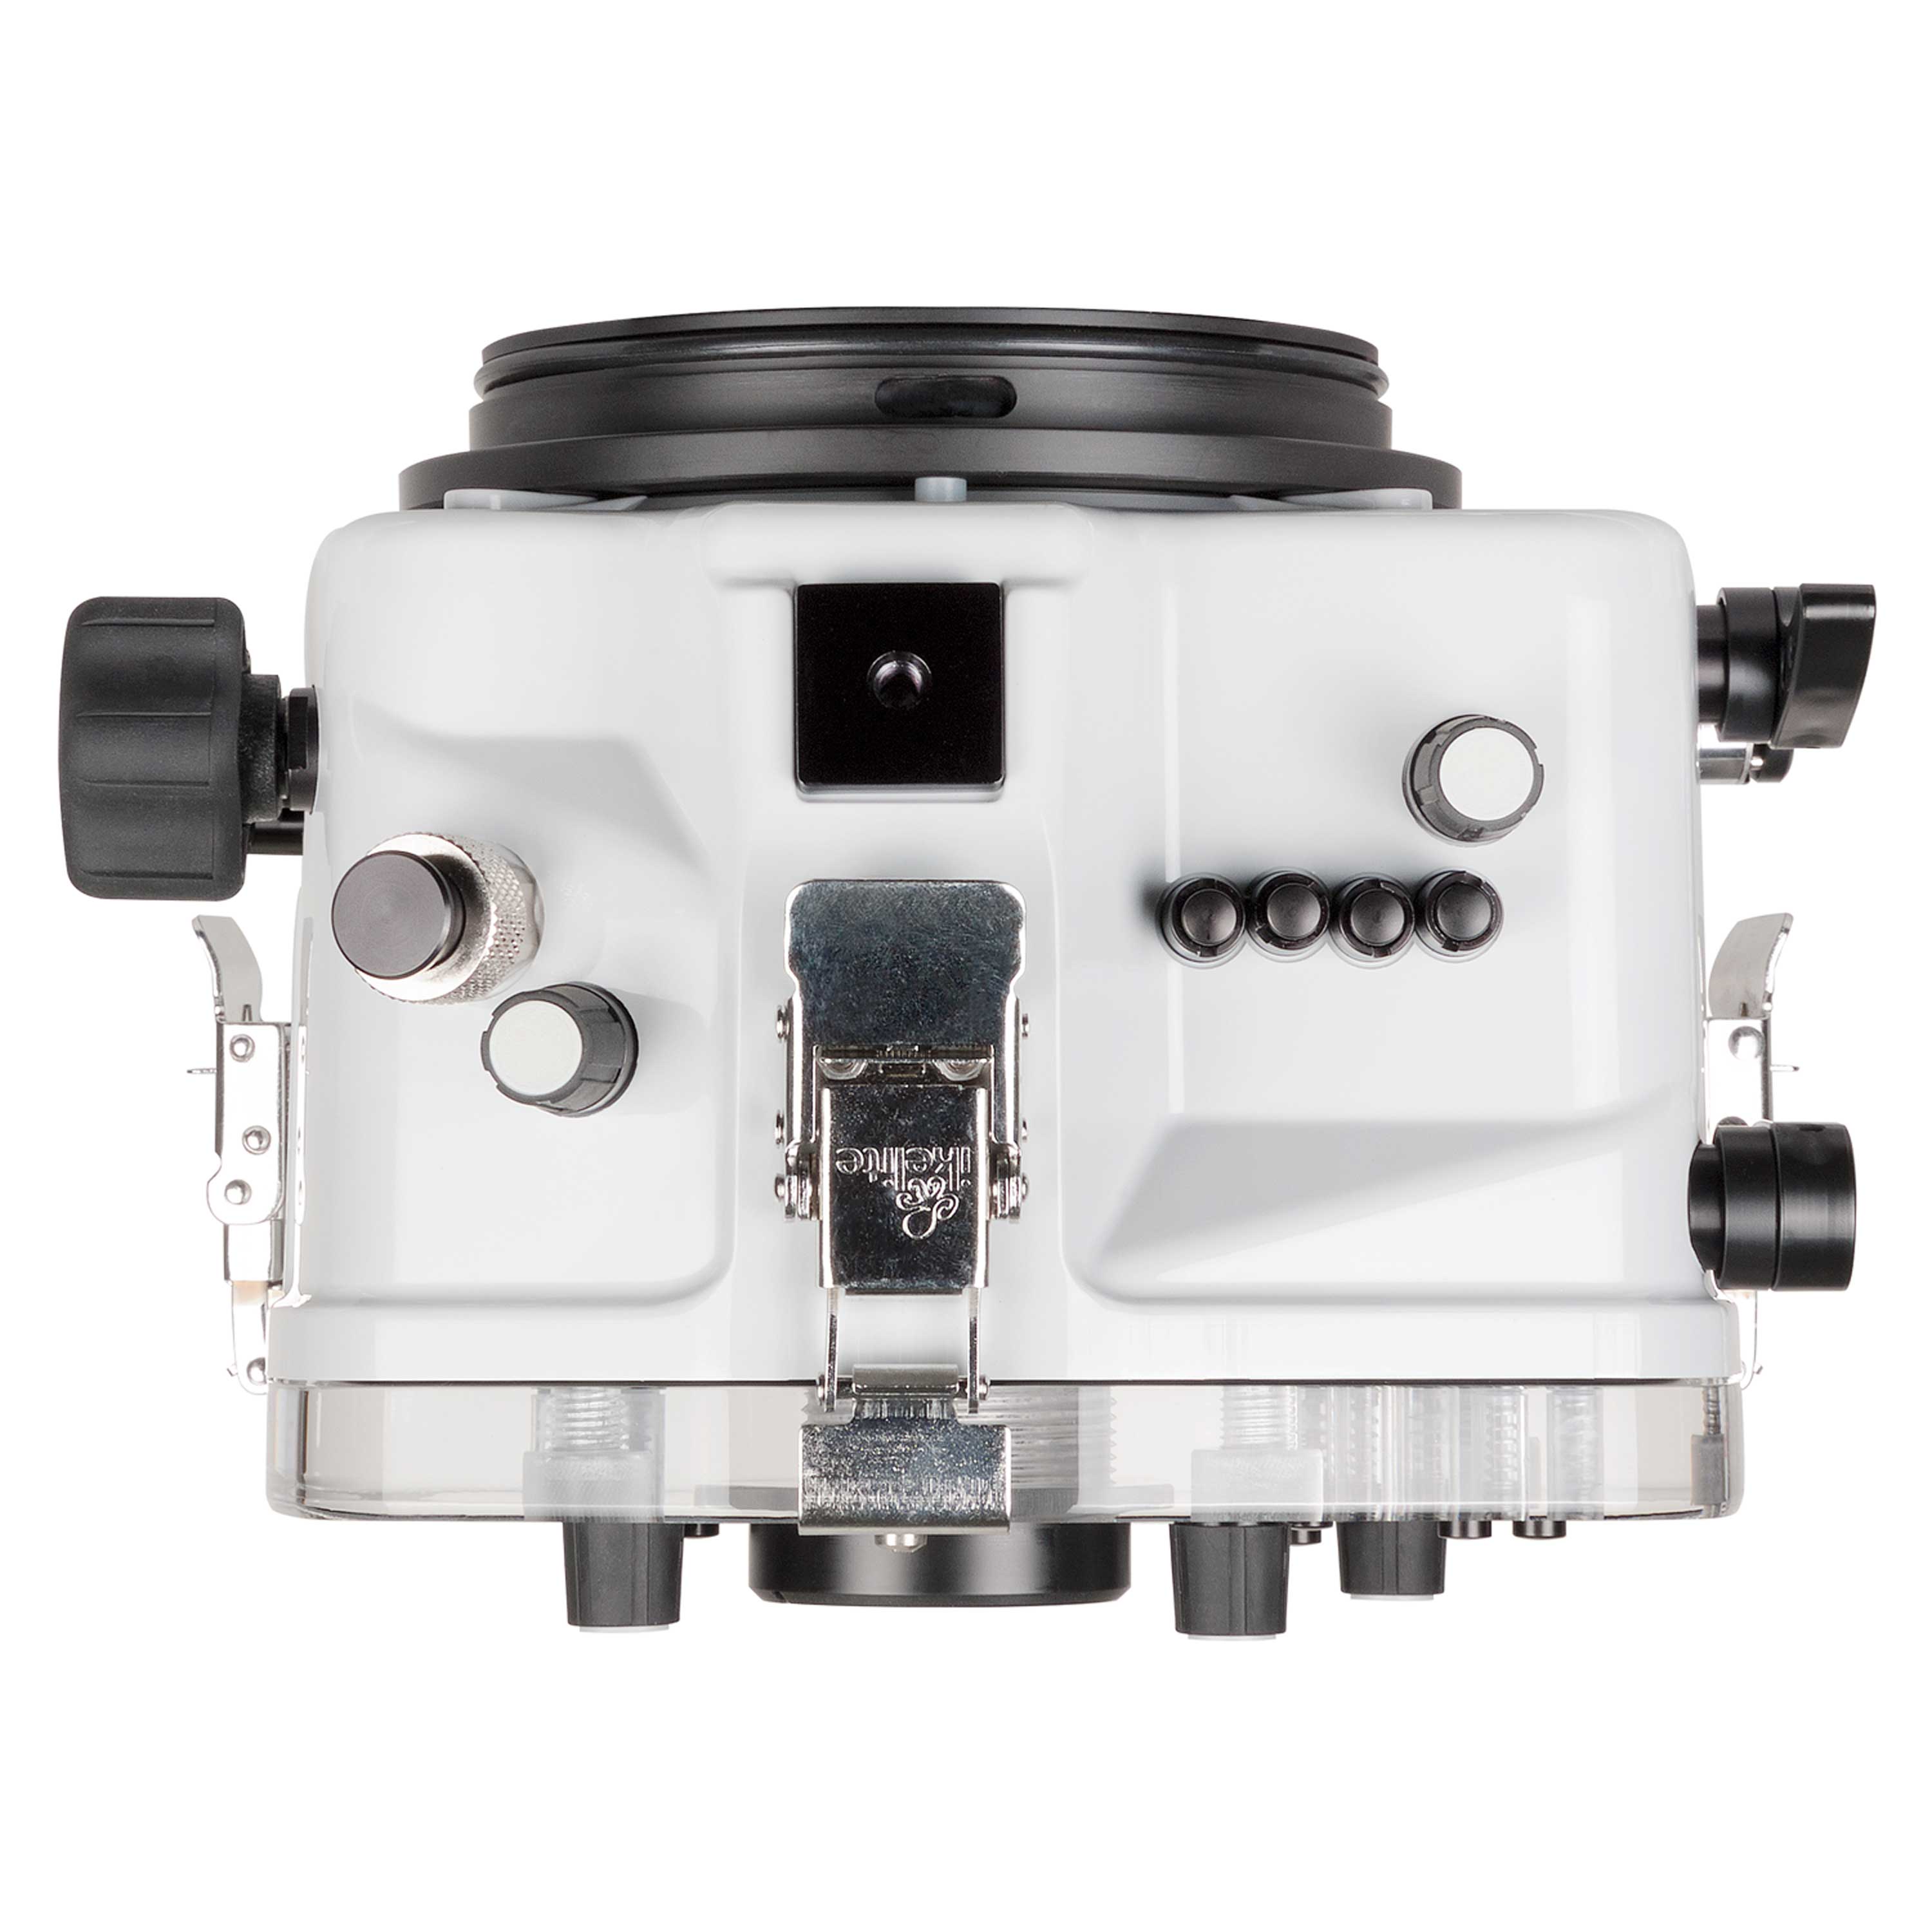 200DL Underwater Housing for Canon EOS 70D DSLR Cameras